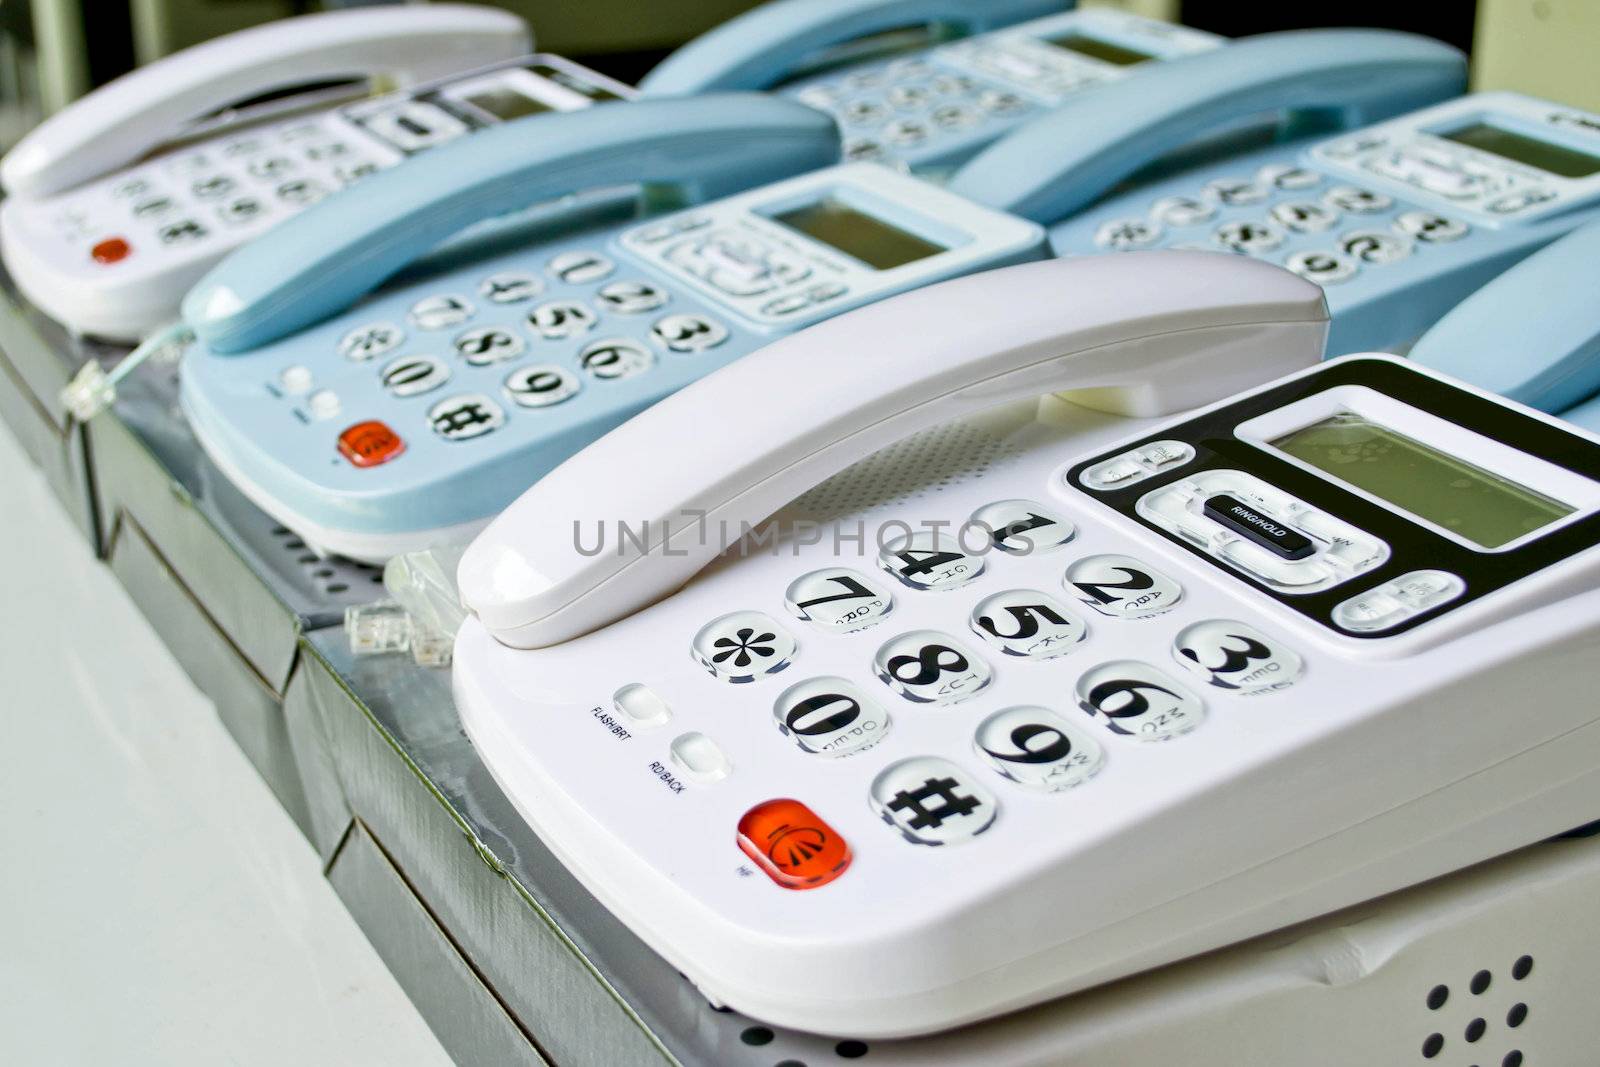 Set of telephones on a desk, receiver close-up